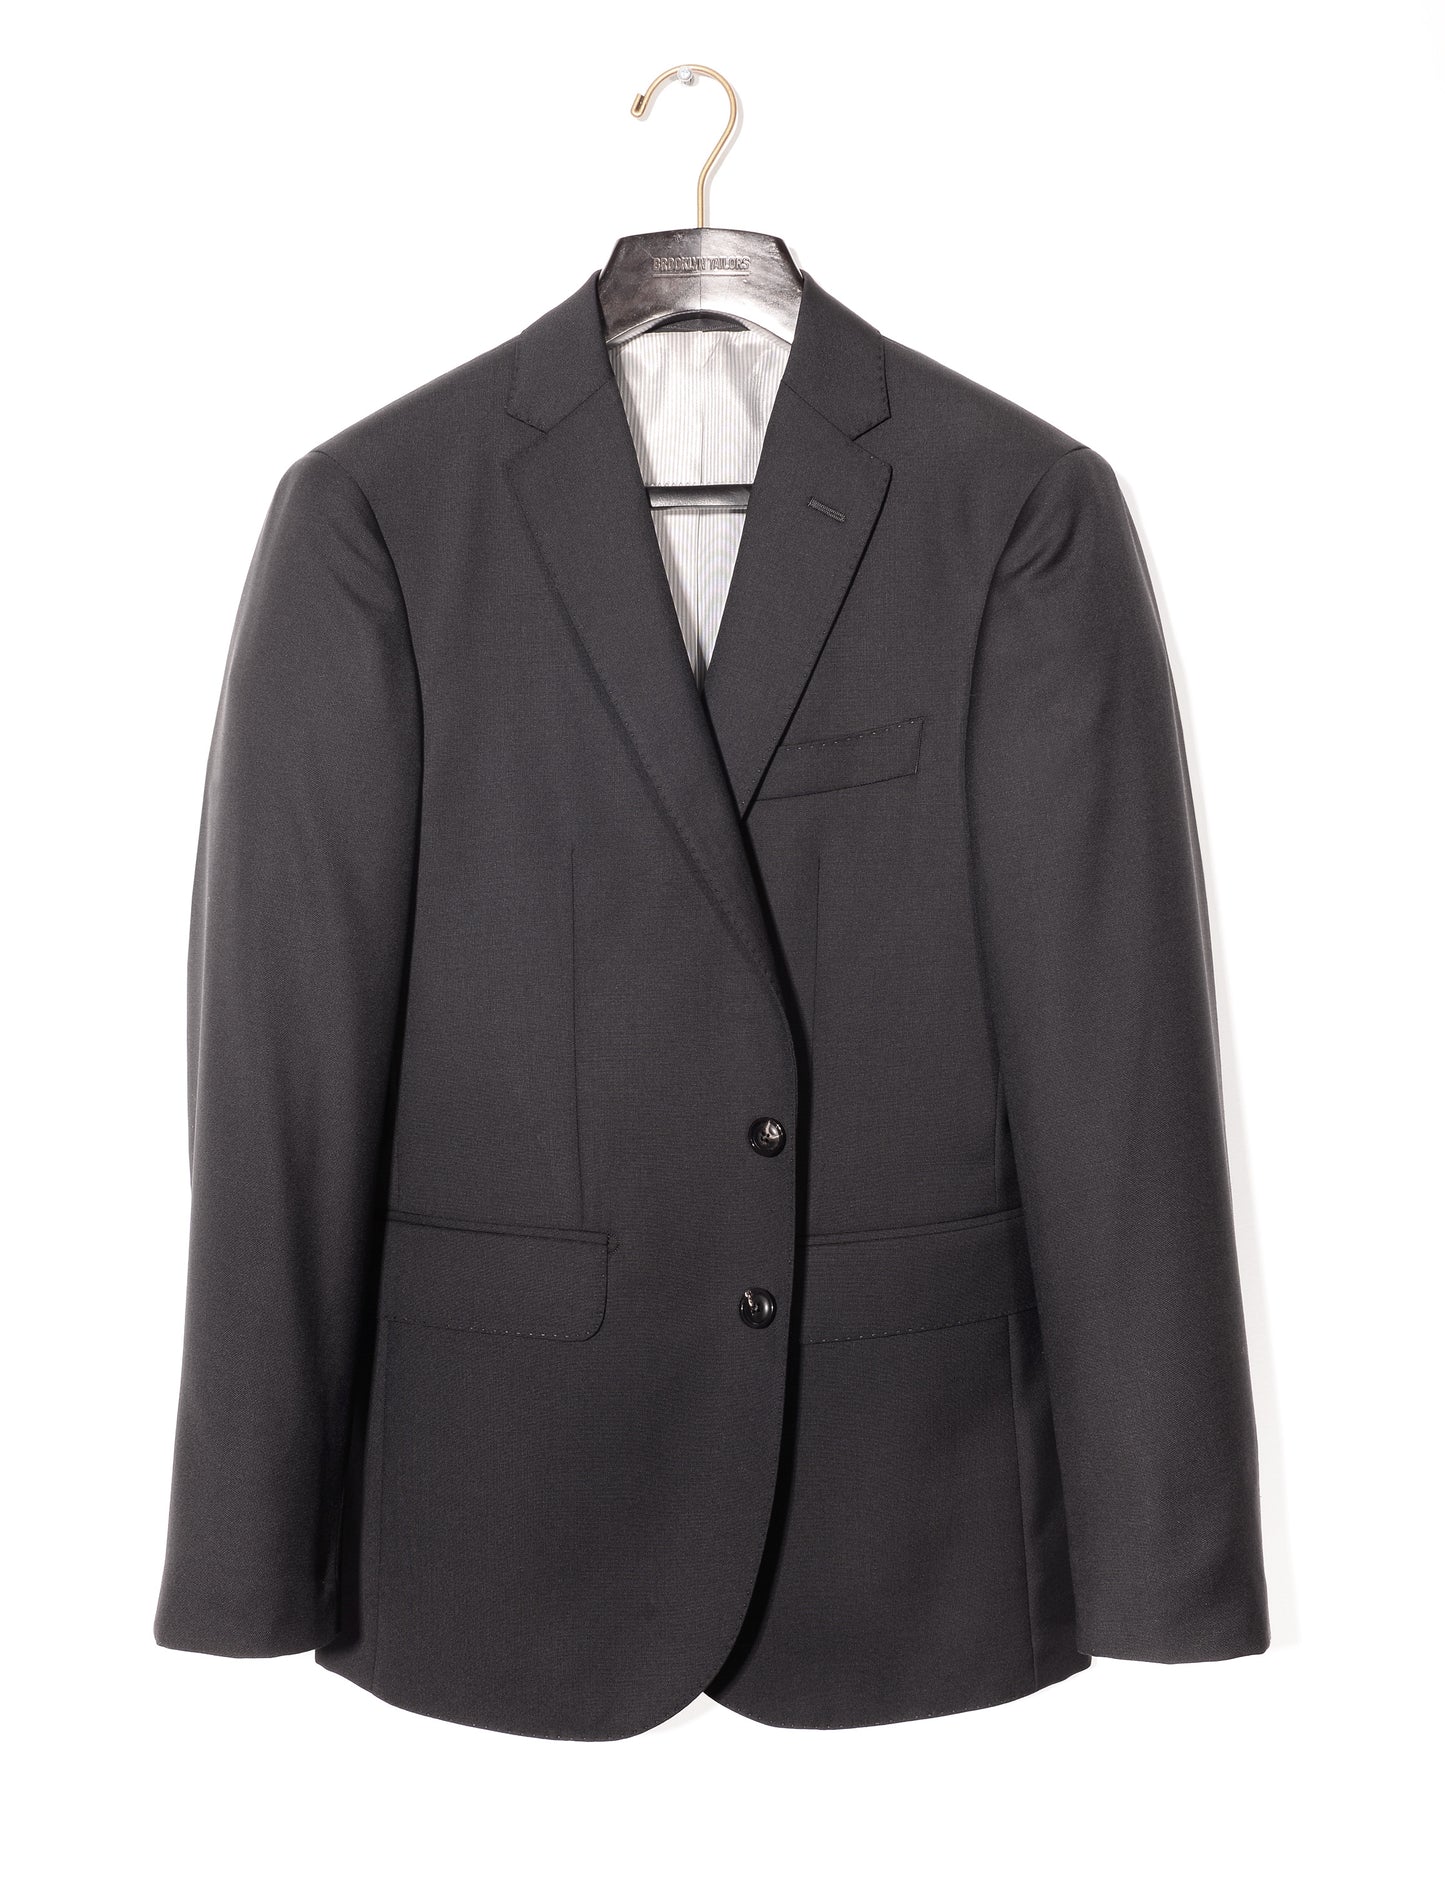 BKT50 Tailored Jacket in Super 110s Plainweave - Black